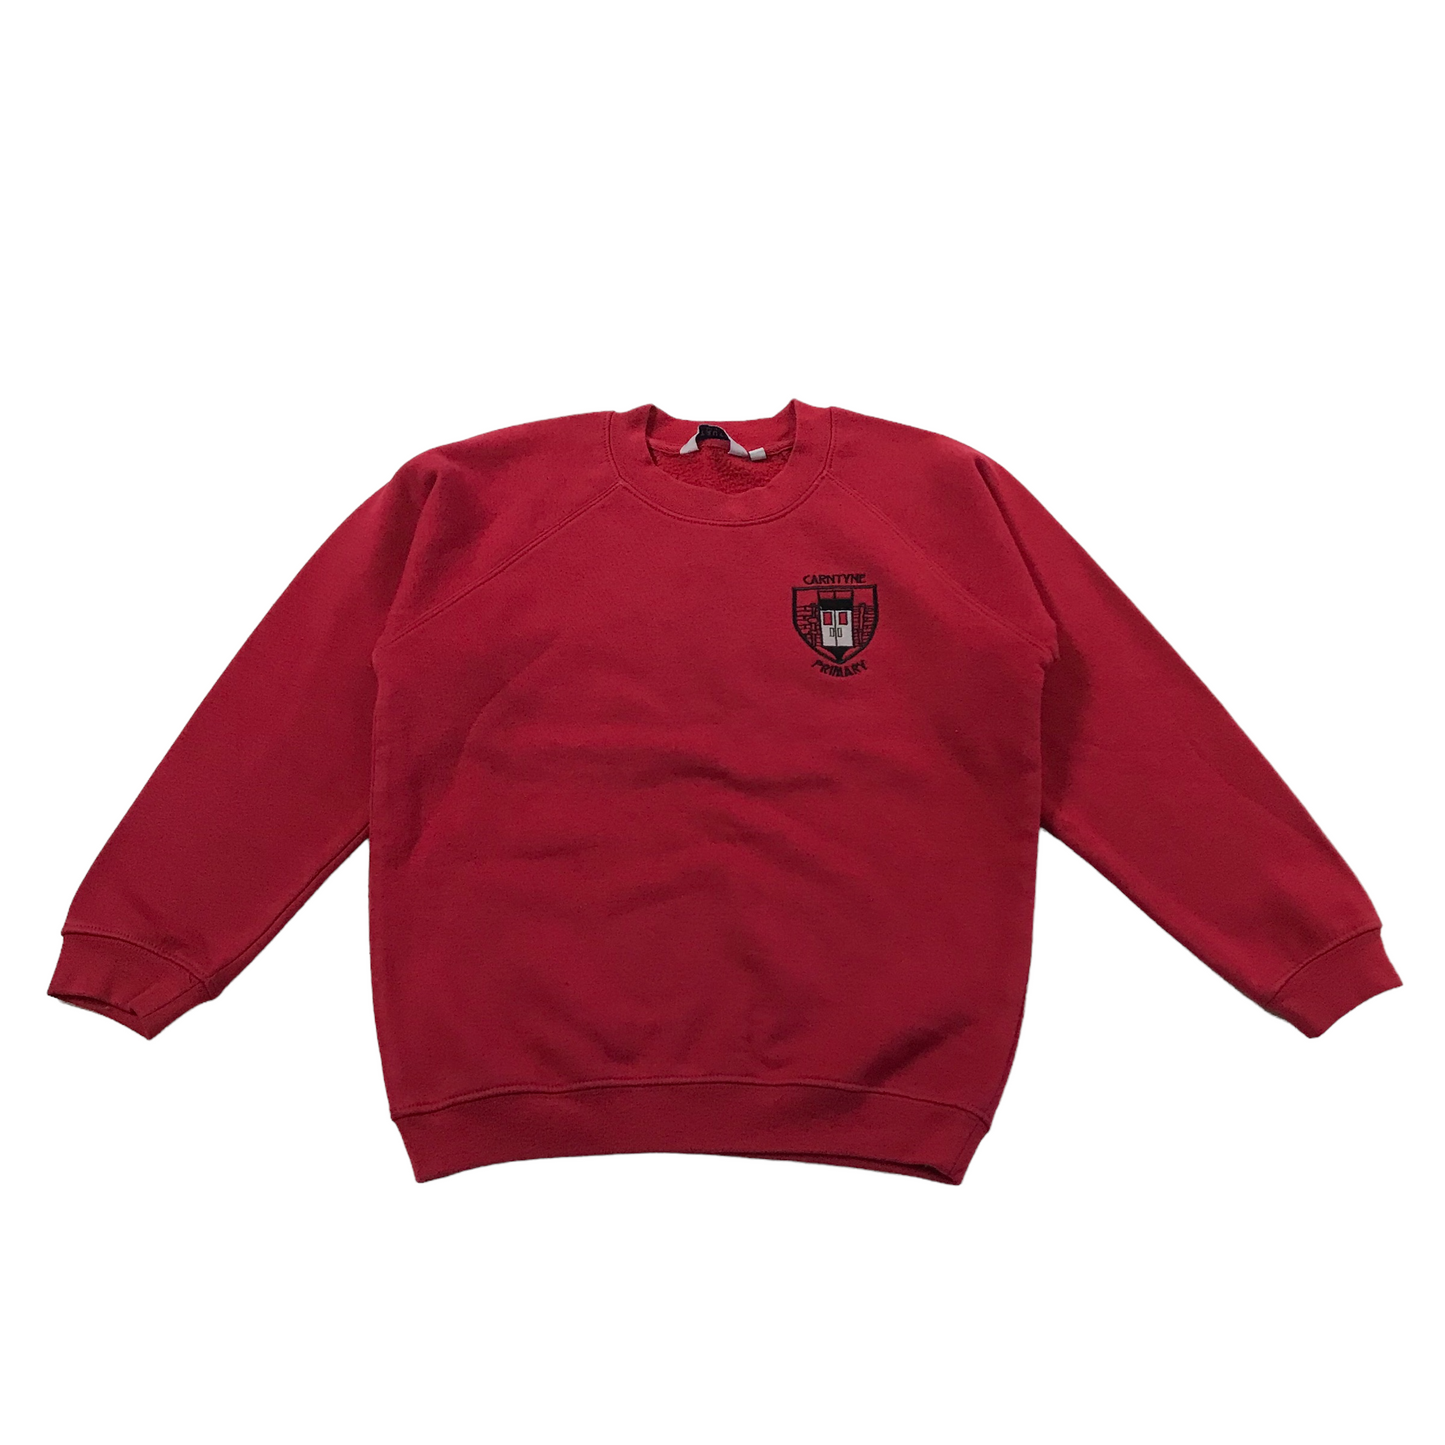 Carntyne Primary Red Crewneck Sweatshirt